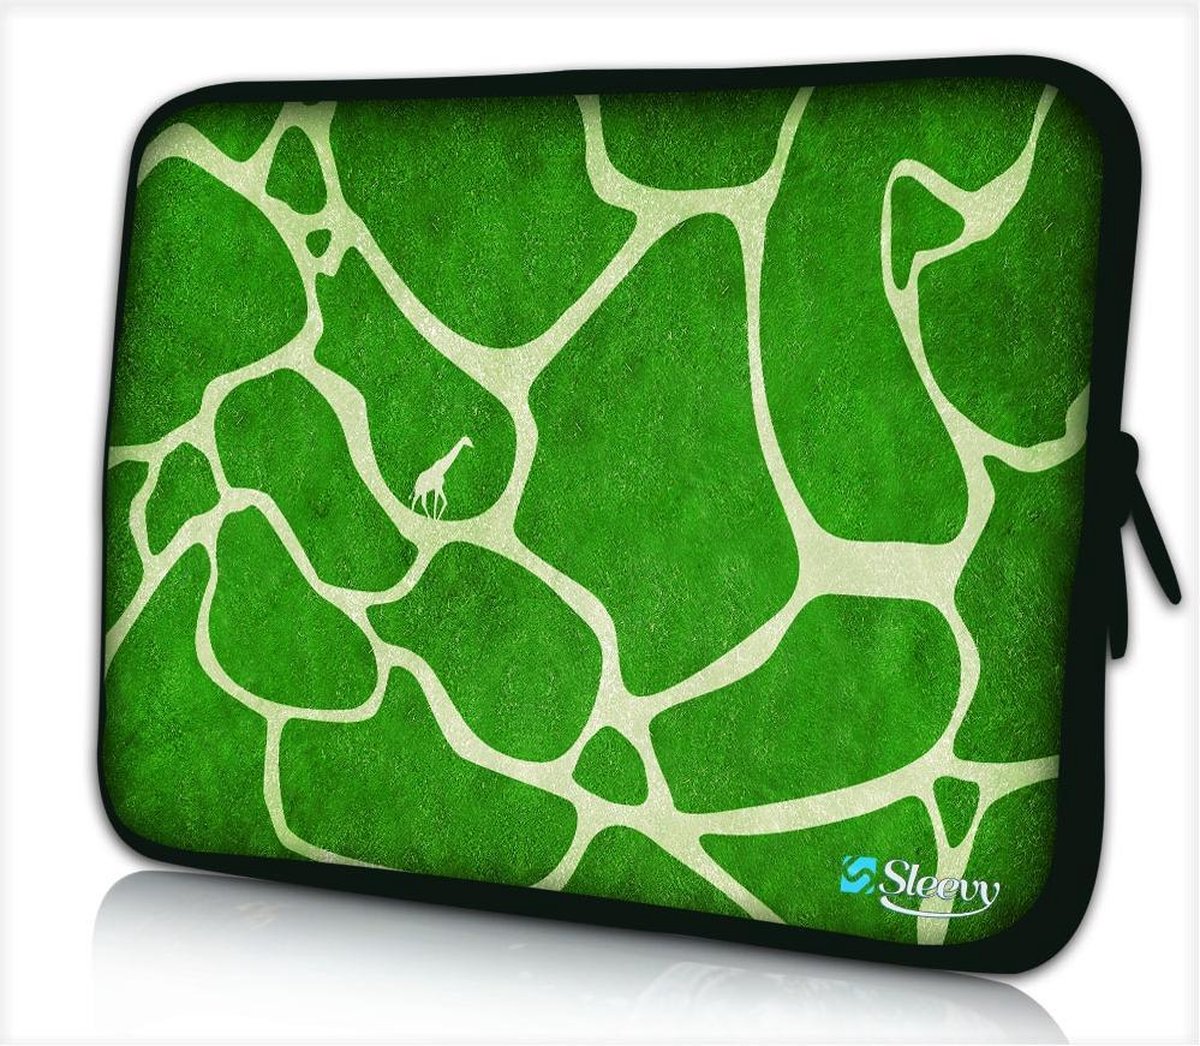 Sleevy 15,6 laptophoes groene giraffe print - laptop sleeve - Sleevy collectie 300+ designs